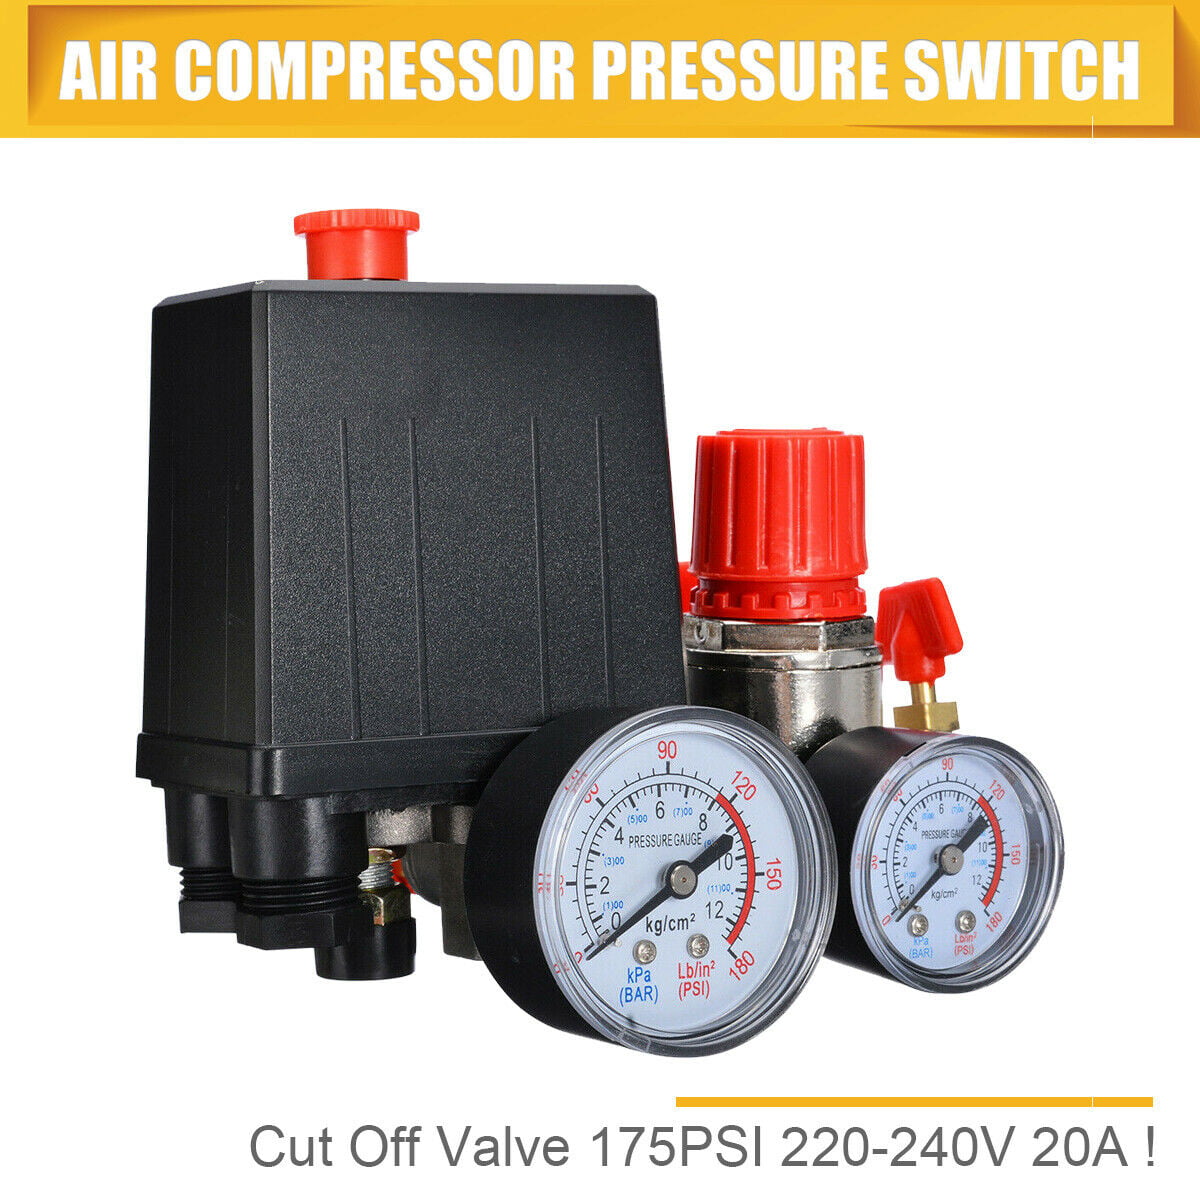 Air Compressor Pressure Switch Control Valve Manifold w/Gauges Relief Regulator